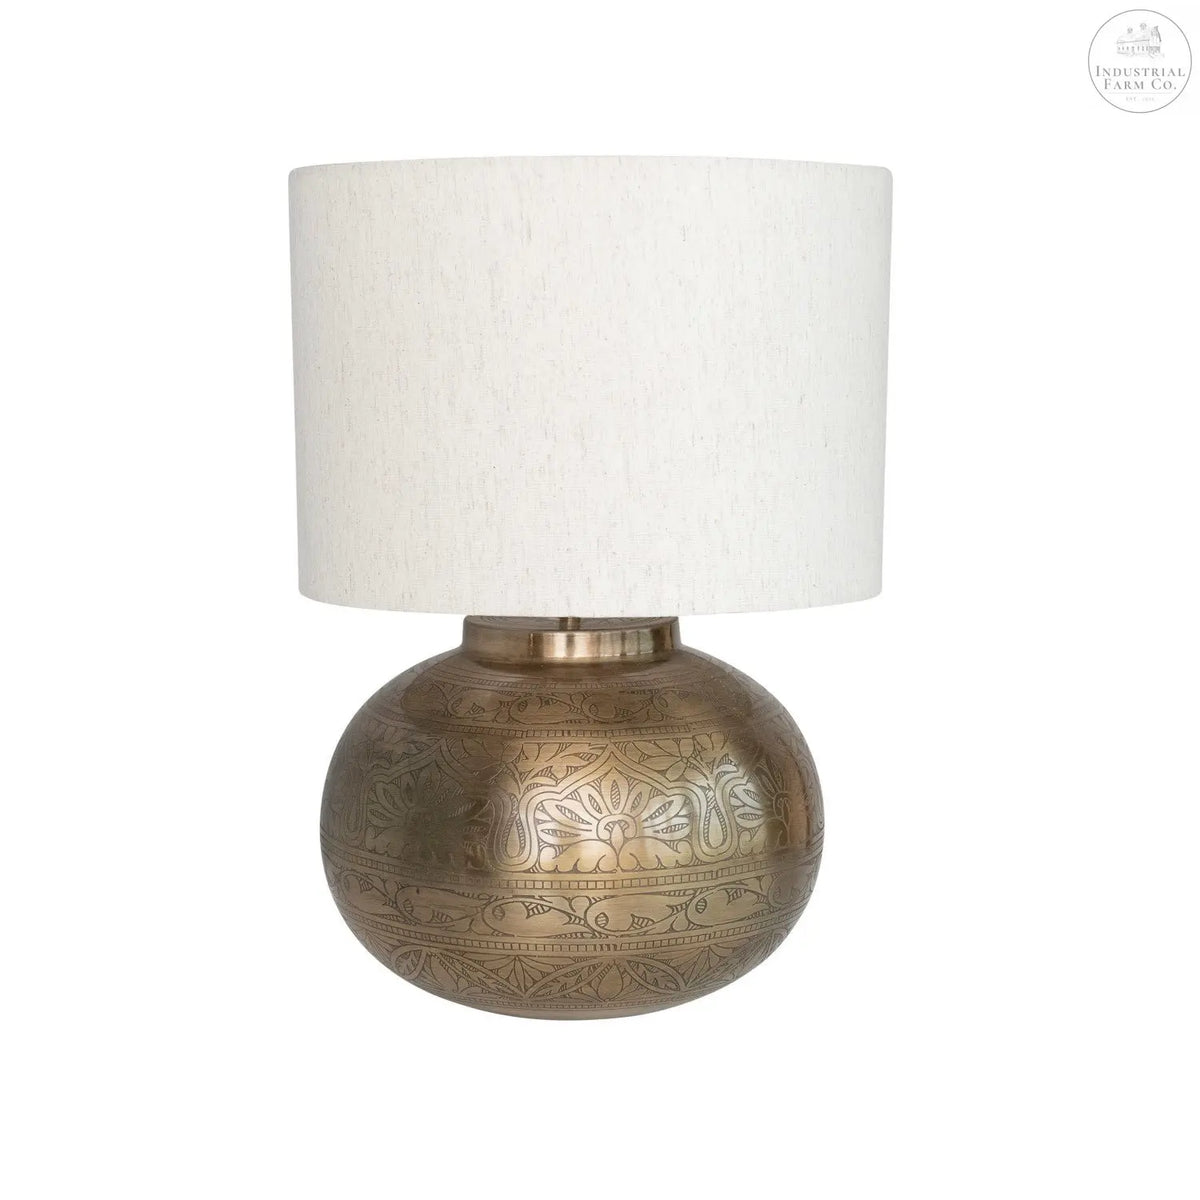 Magpie Brass Table Lamp  Default Title   | Industrial Farm Co